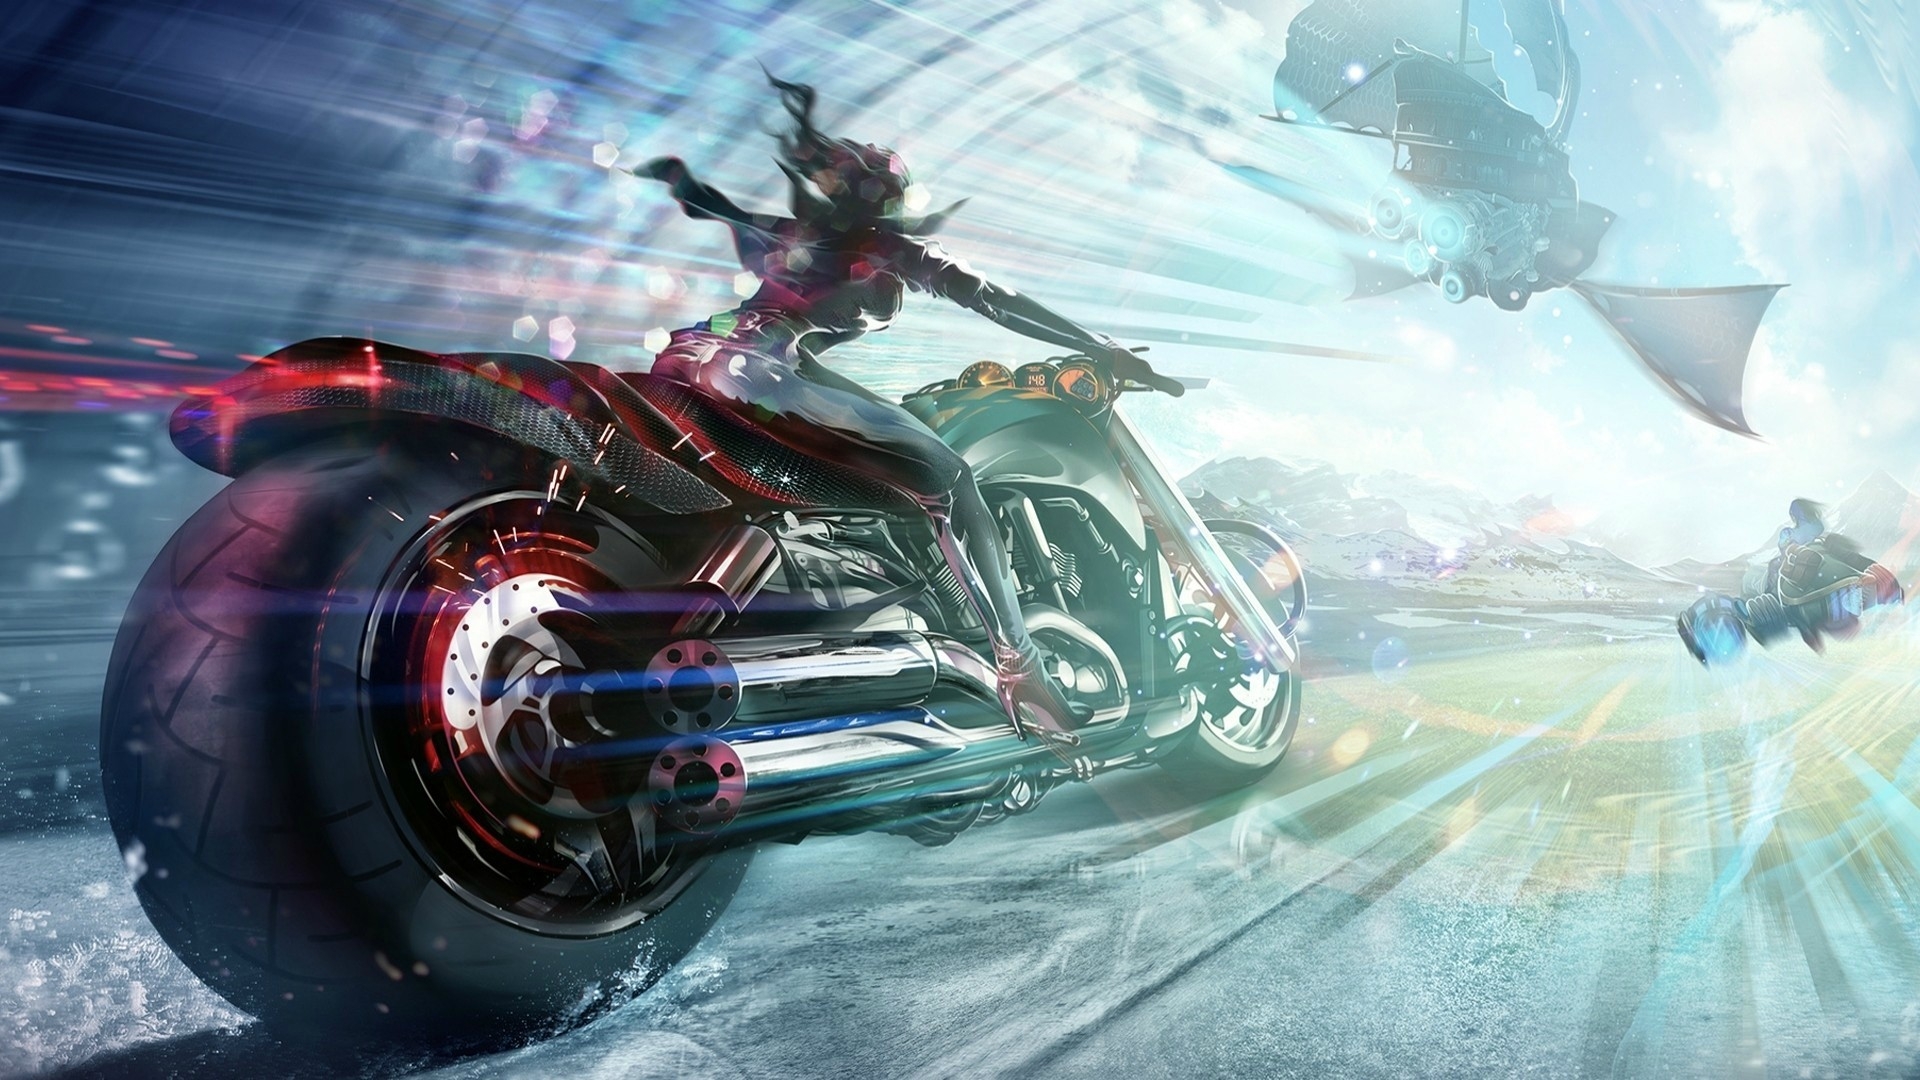 Download 1920x1080 Anime Girl, Futuristic Motorcycle, Sci Fi, Racing Wallpaper For Widescreen